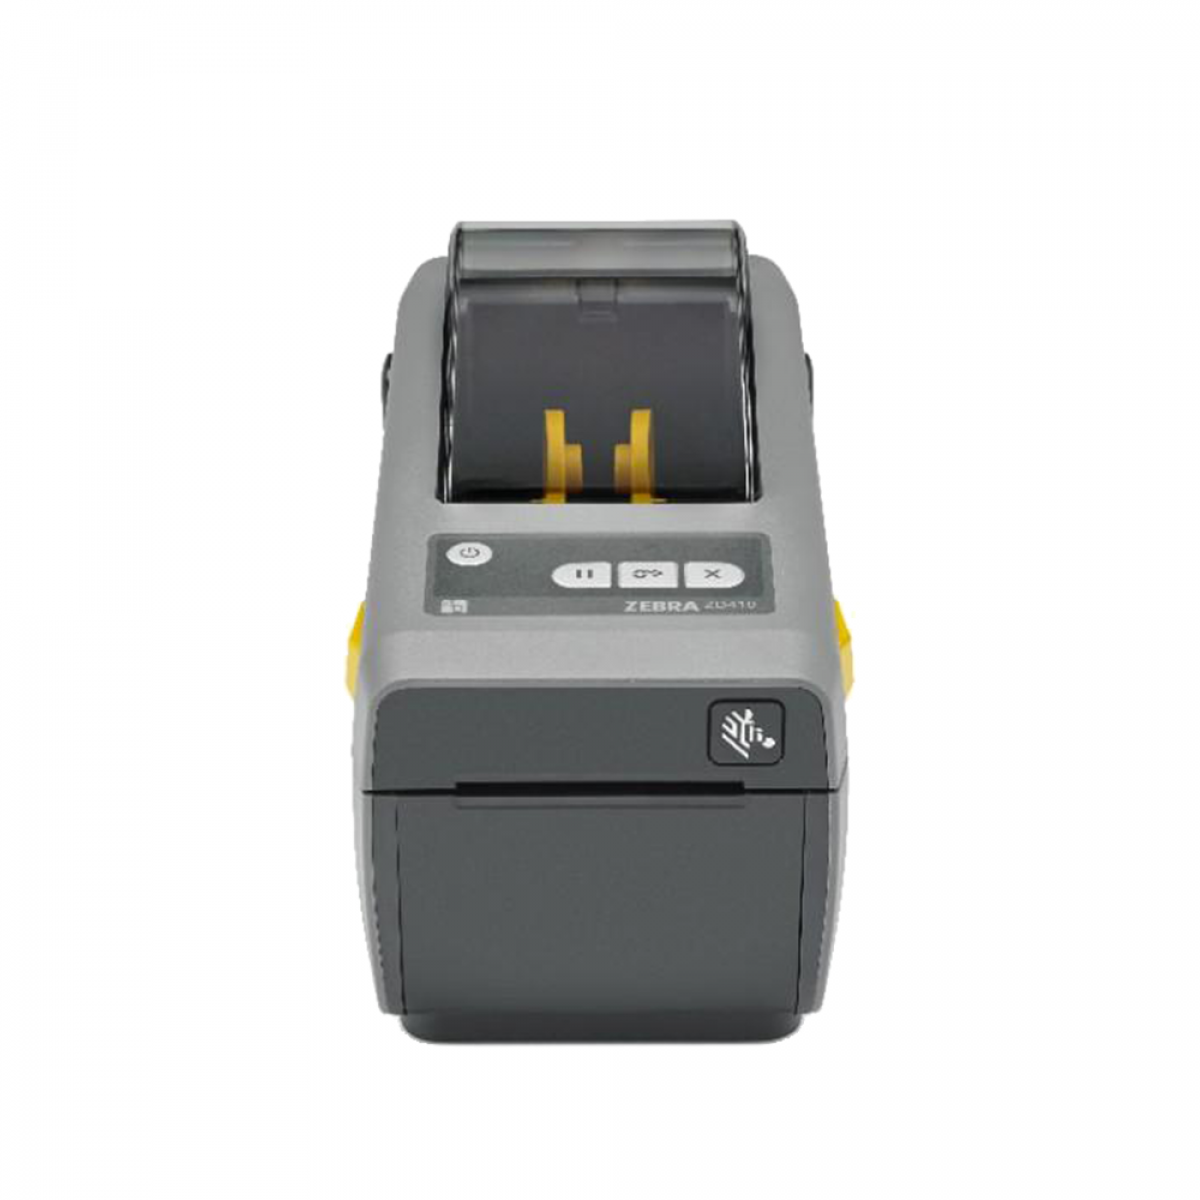 Zebra ZD410 2 inch ultra compact printer